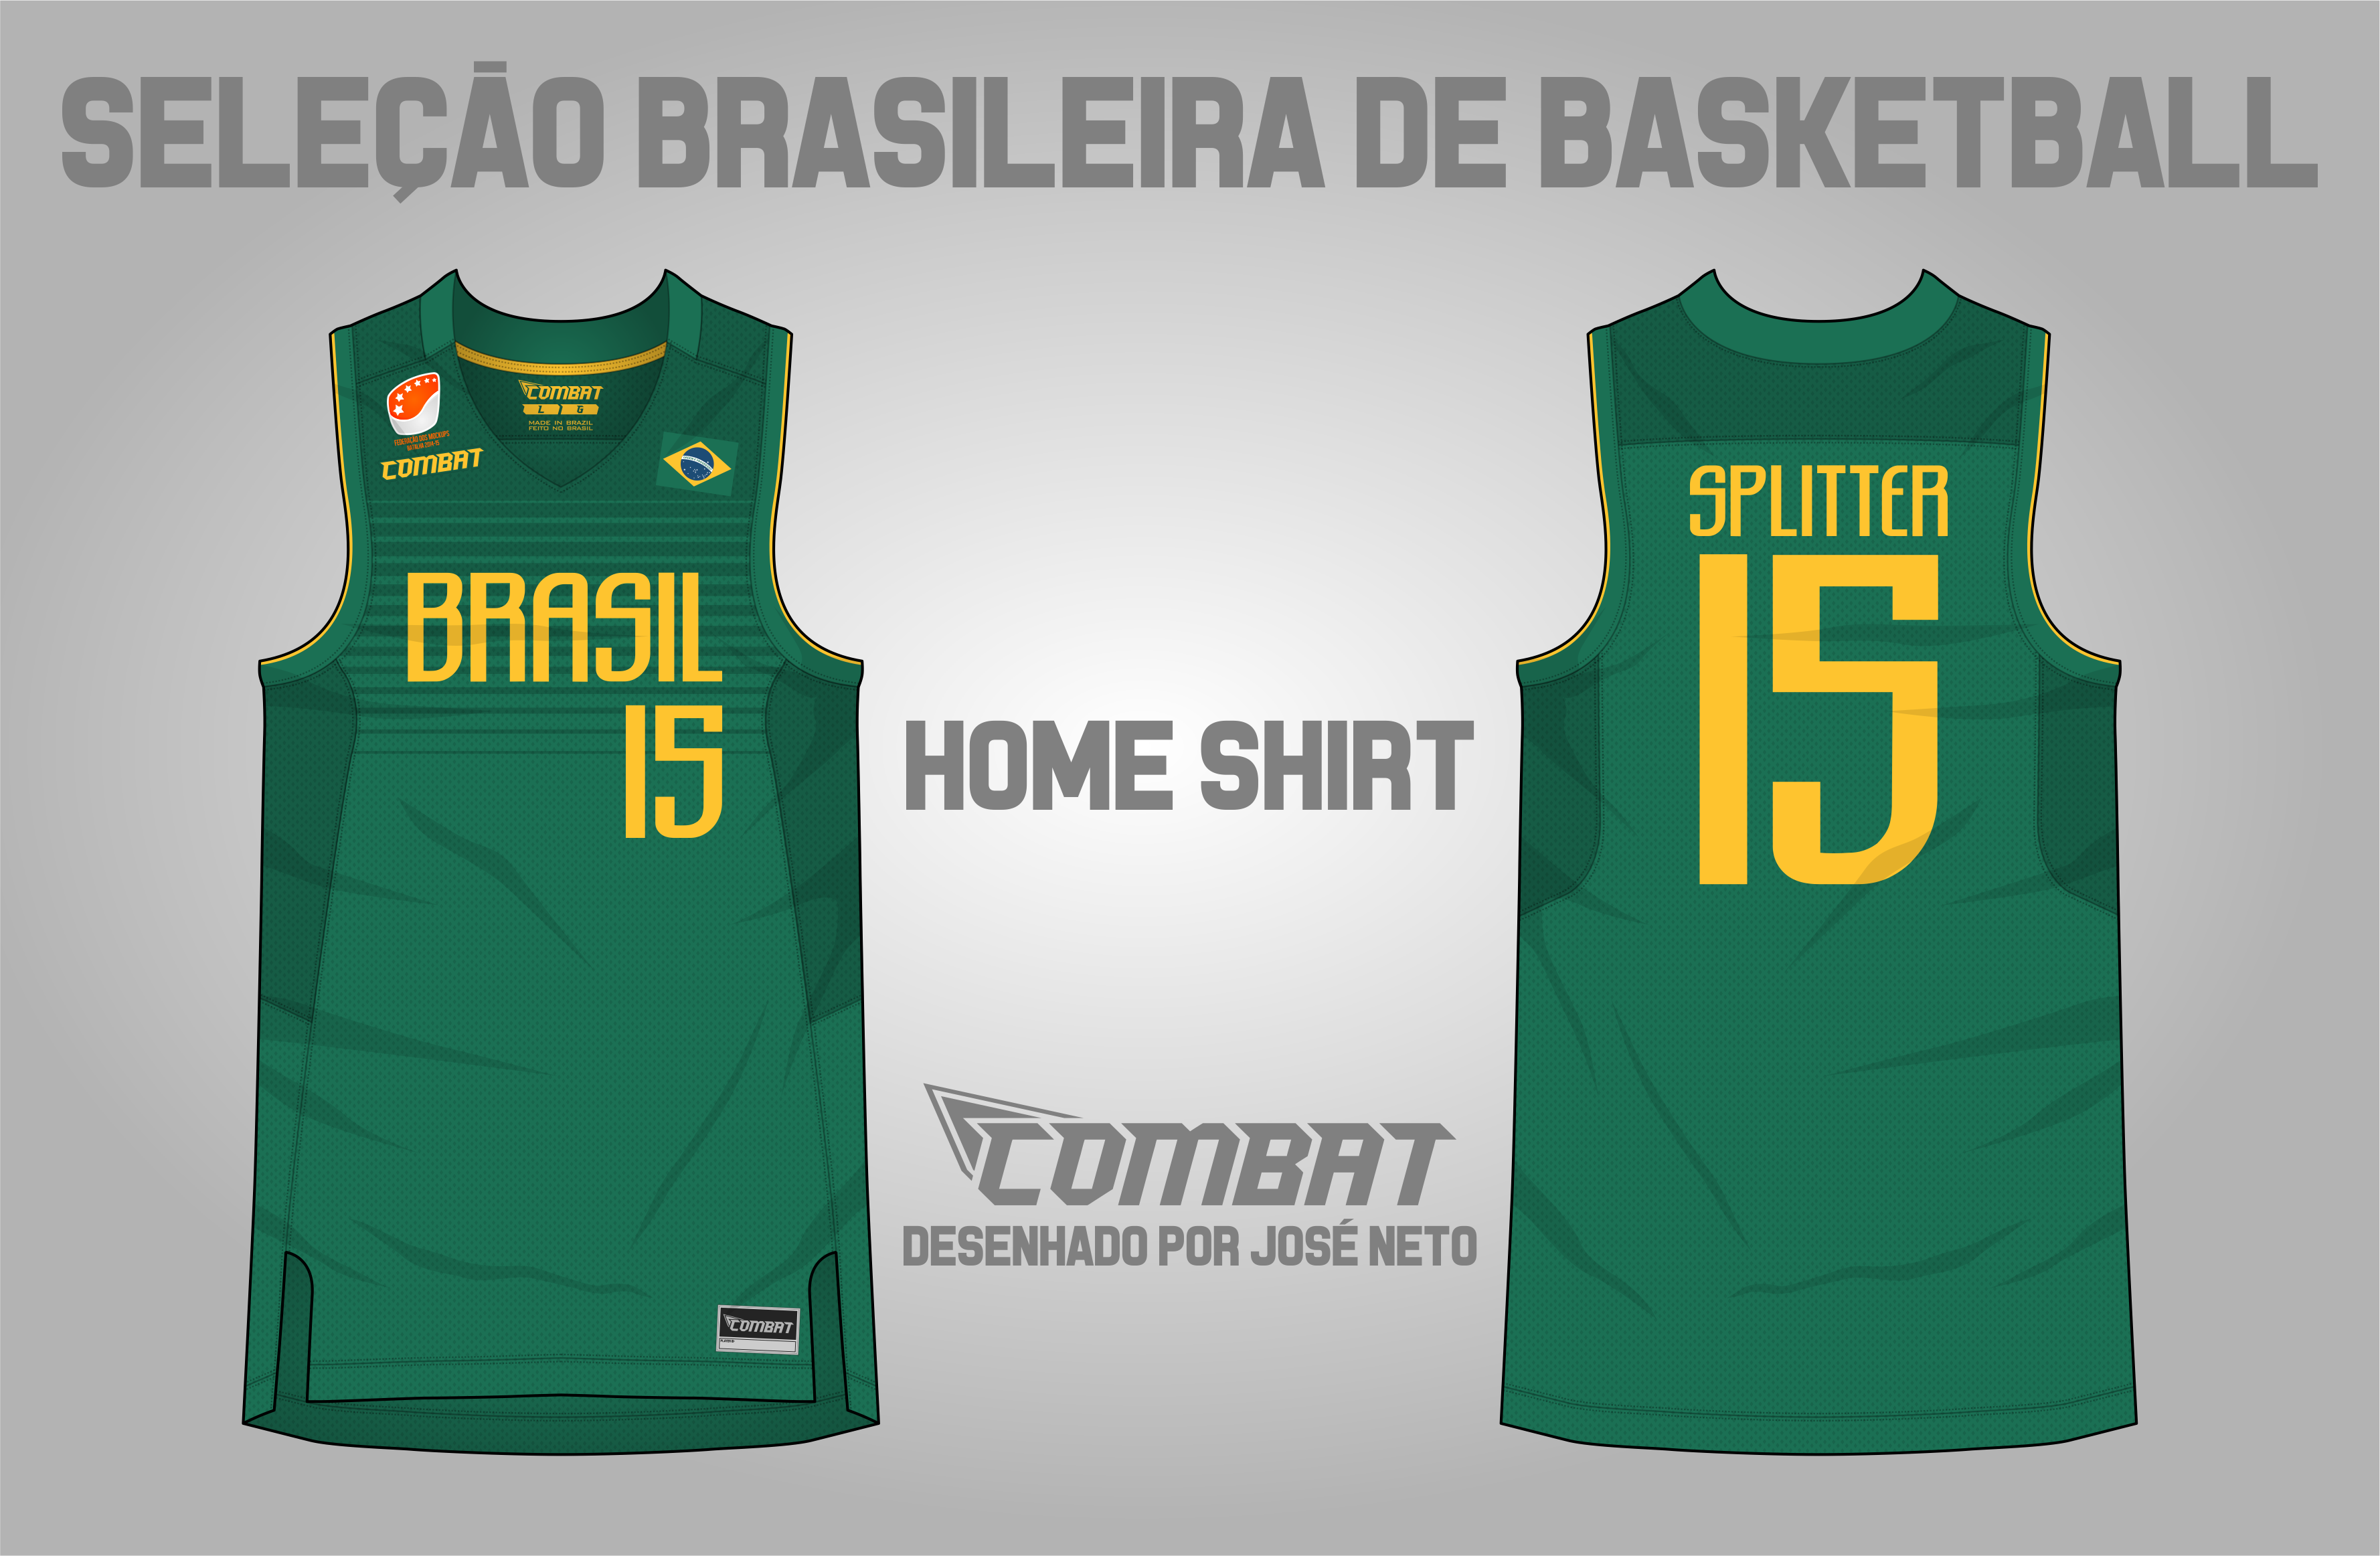 Combat Sportwear by José Neto: Seleção Brasileira de Basketball - Brazil